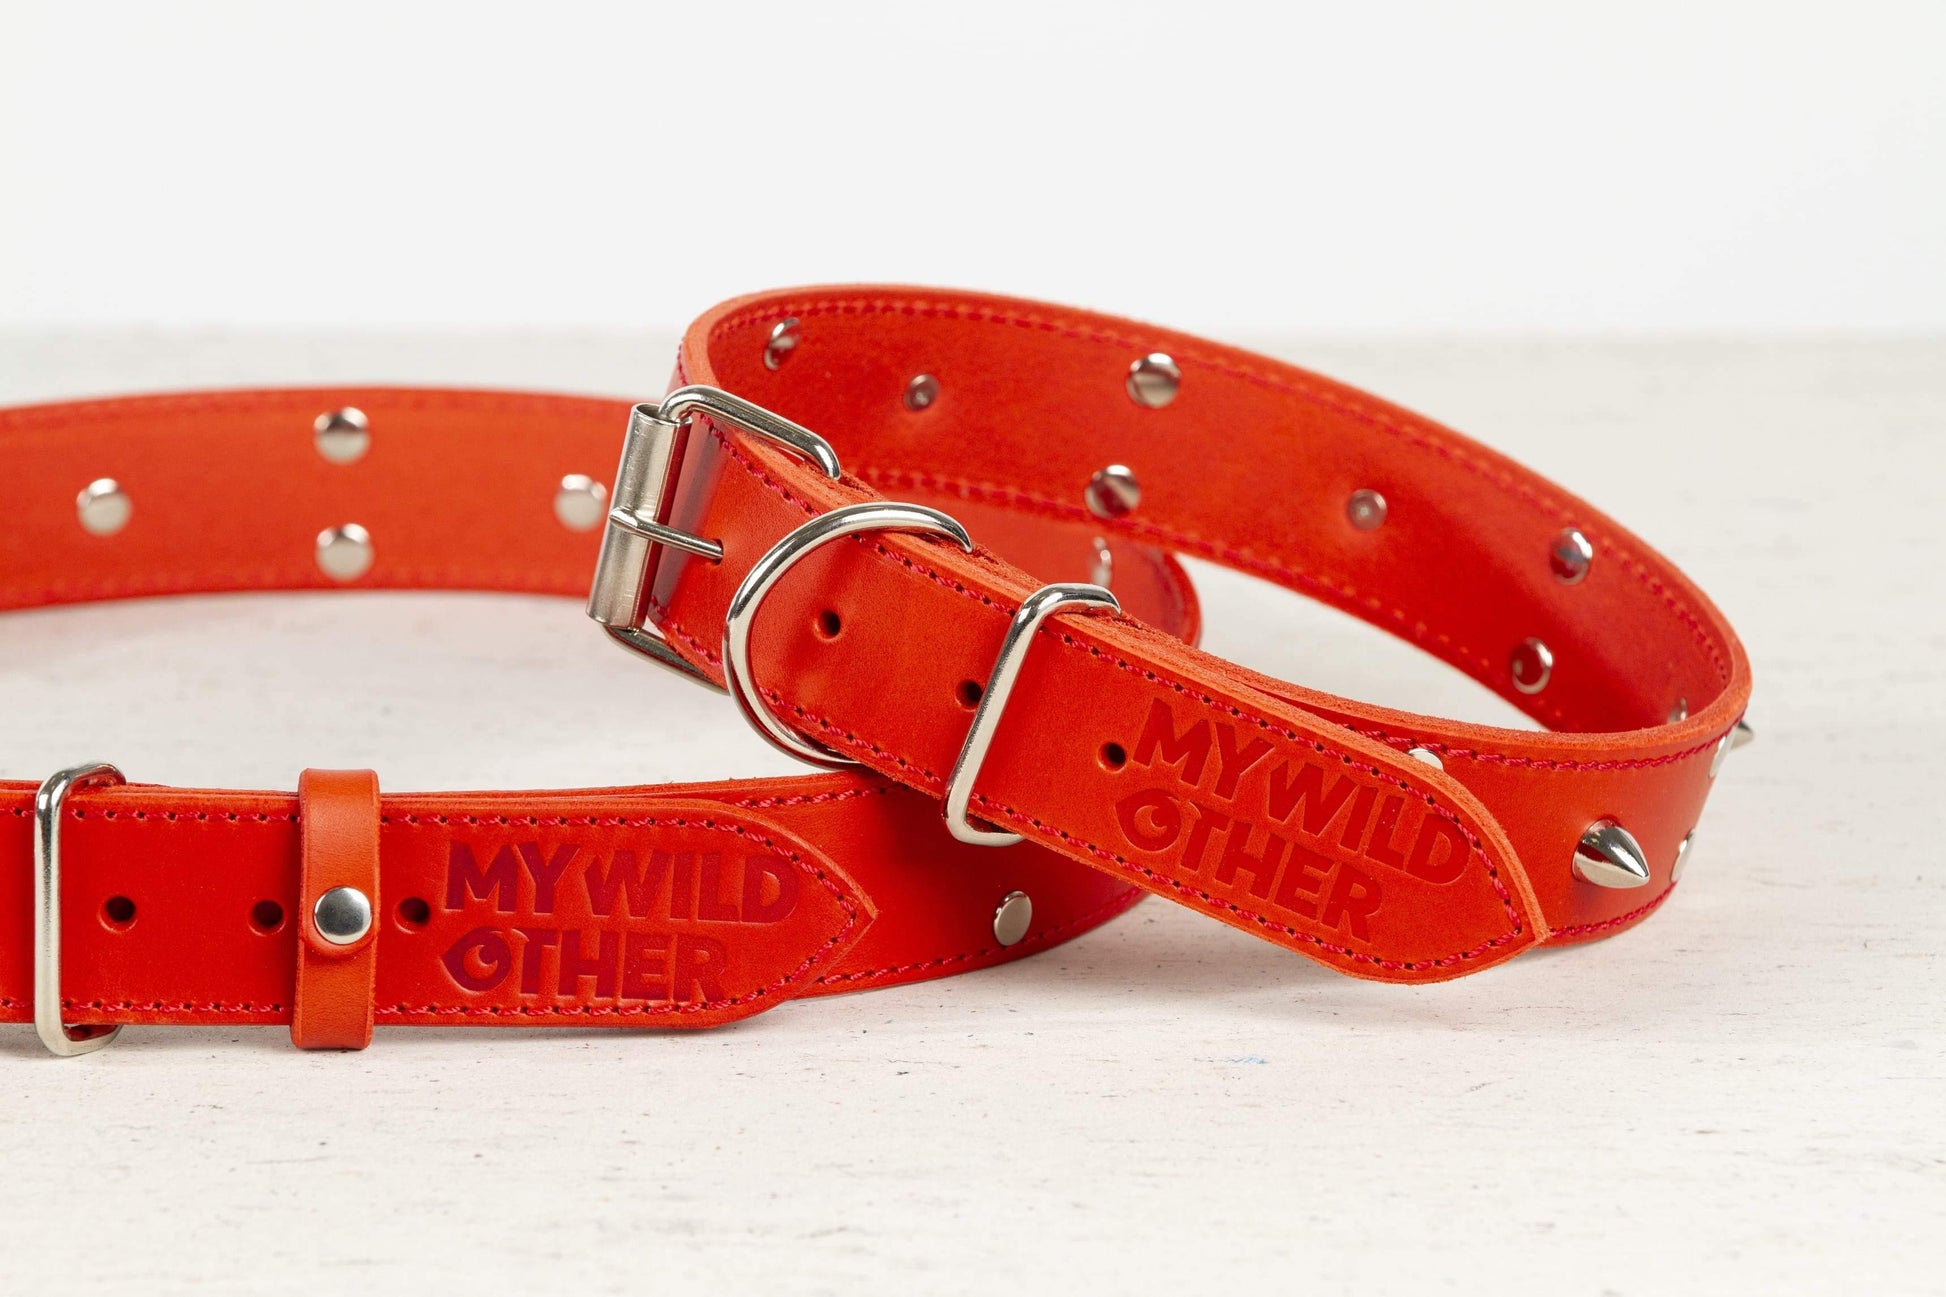 Handmade red leather STUDDED dog collar - premium dog goods handmade in Europe by animalistus